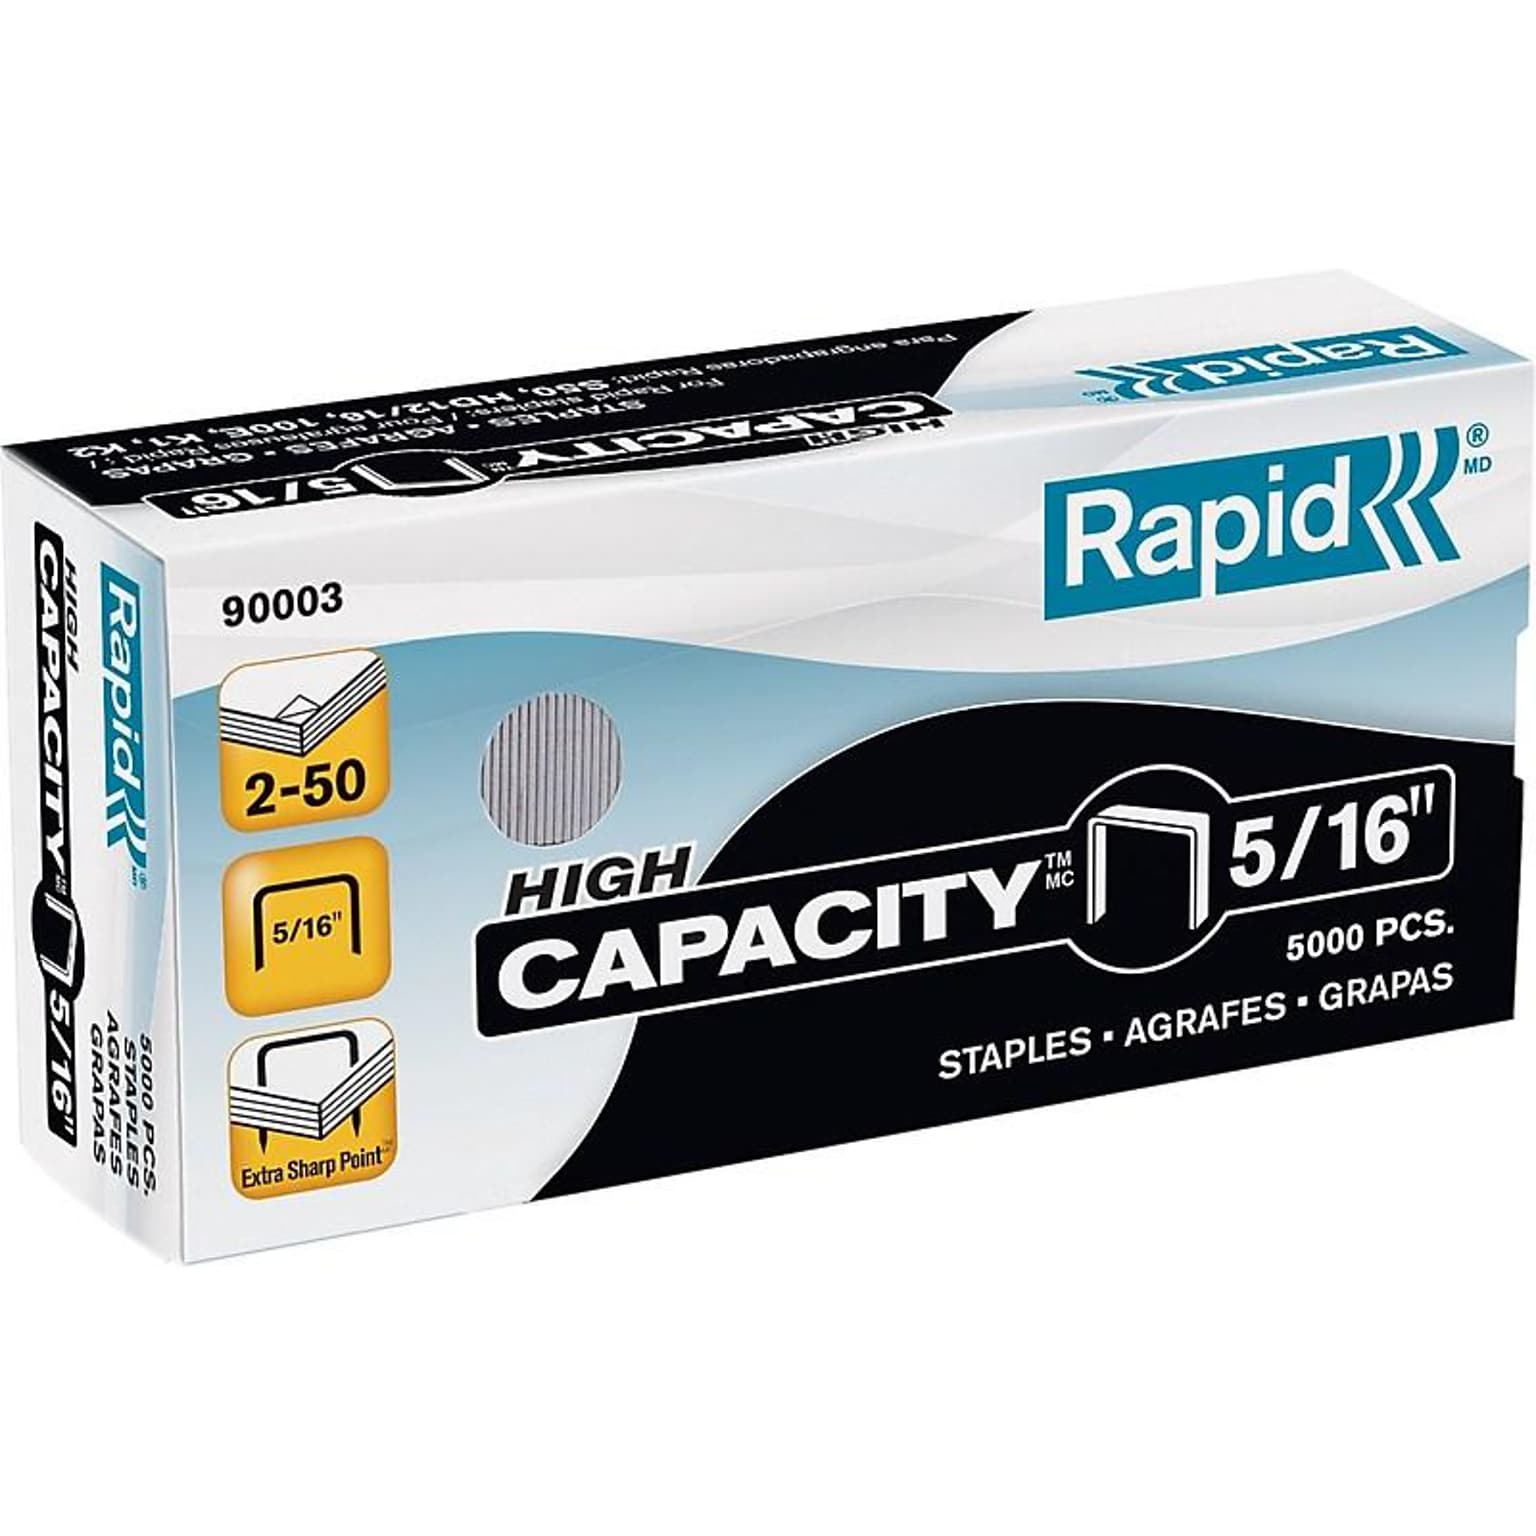 Rapid High Capacity Staples, 5/16 Leg Length, 5000/Box (90003)